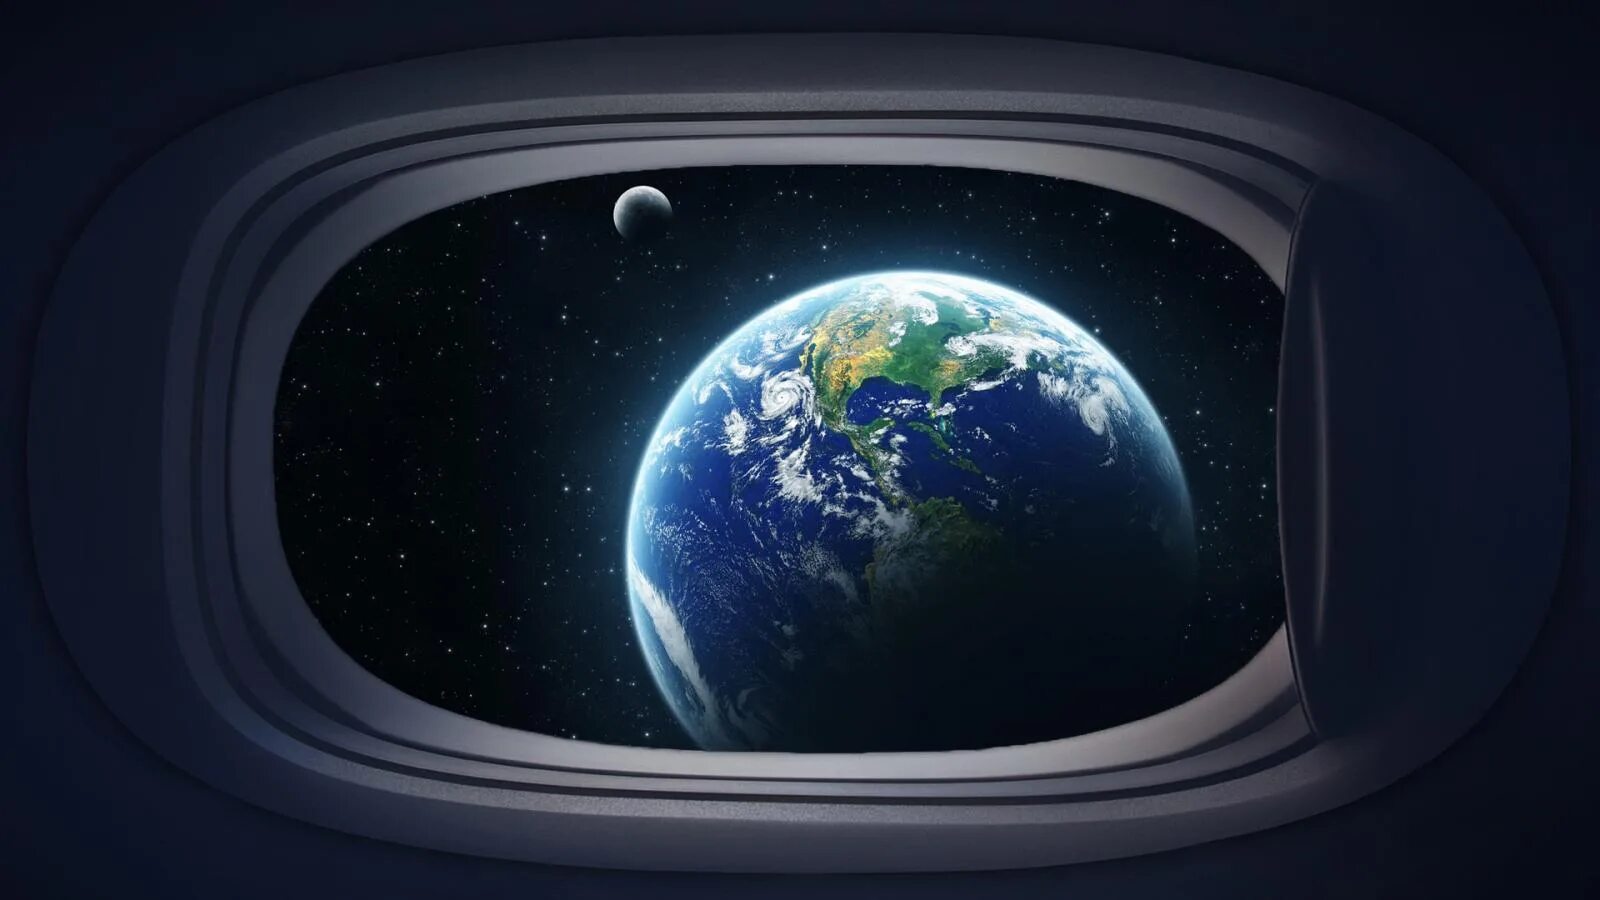 Земля в иллюминаторе картинки. Вид из иллюминатора в космосе. Земля из иллюминатора. Ил земля. Иллюминатор с видом на землю.